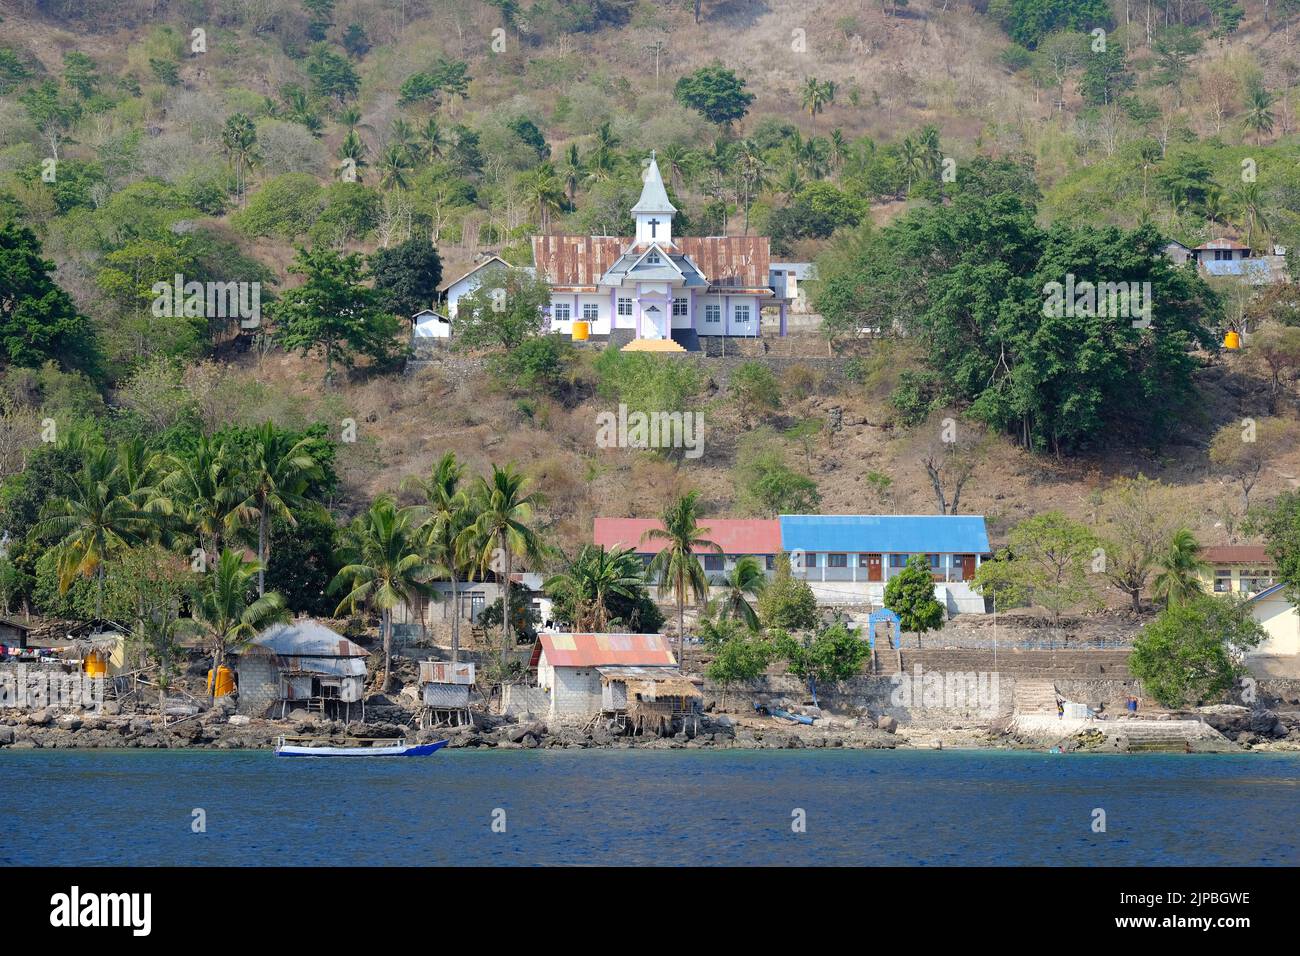 Indonesia Alor Island - maravilloso pueblo pesquero costero con la iglesia del pueblo Foto de stock